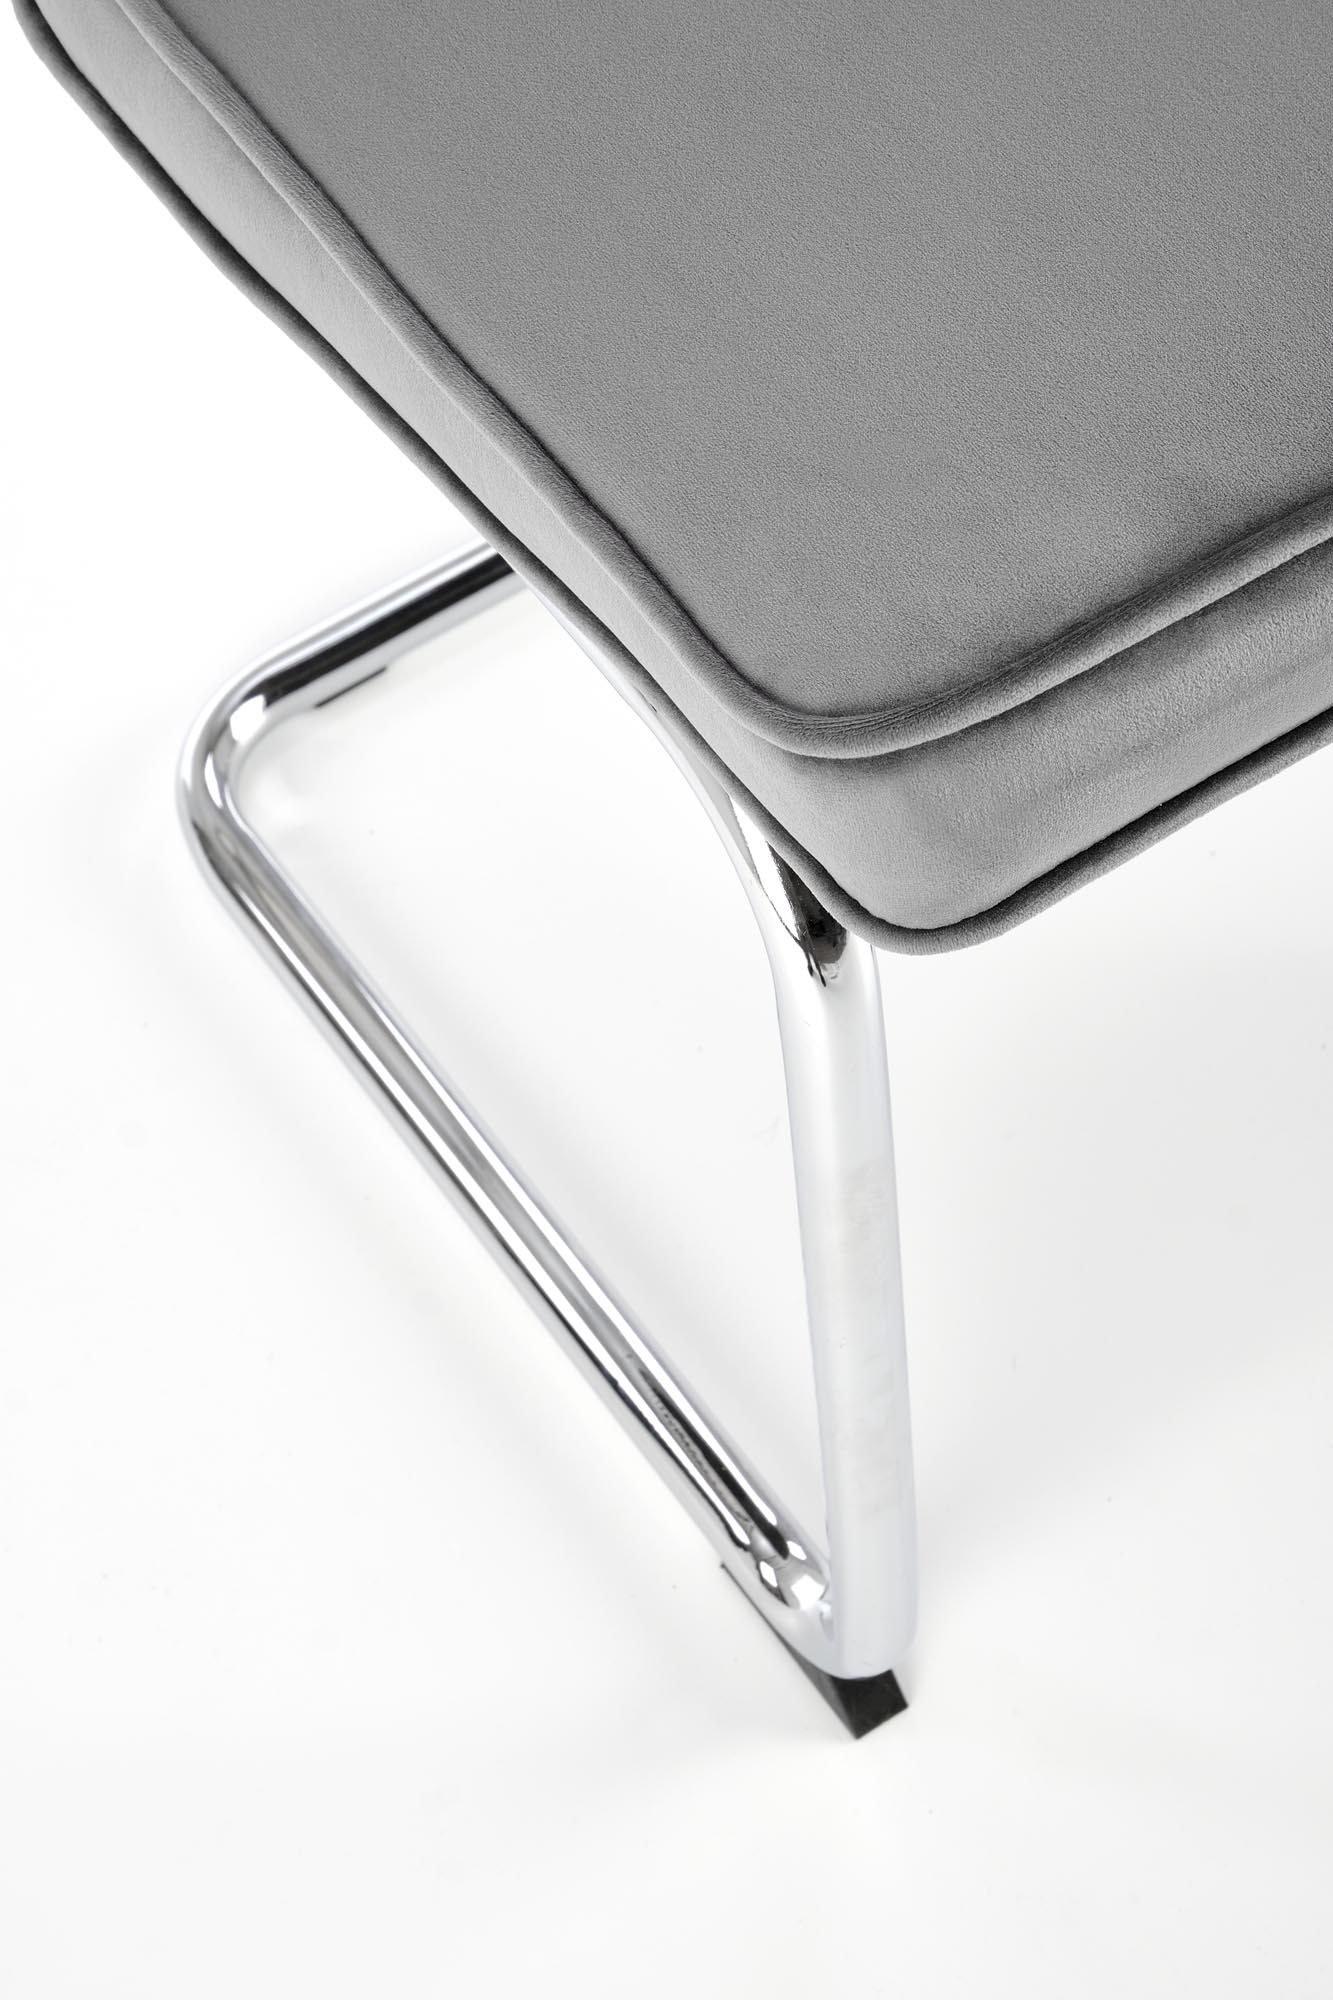 K510 Stolička Popolový krzeszlo kovové k510 - Popolový